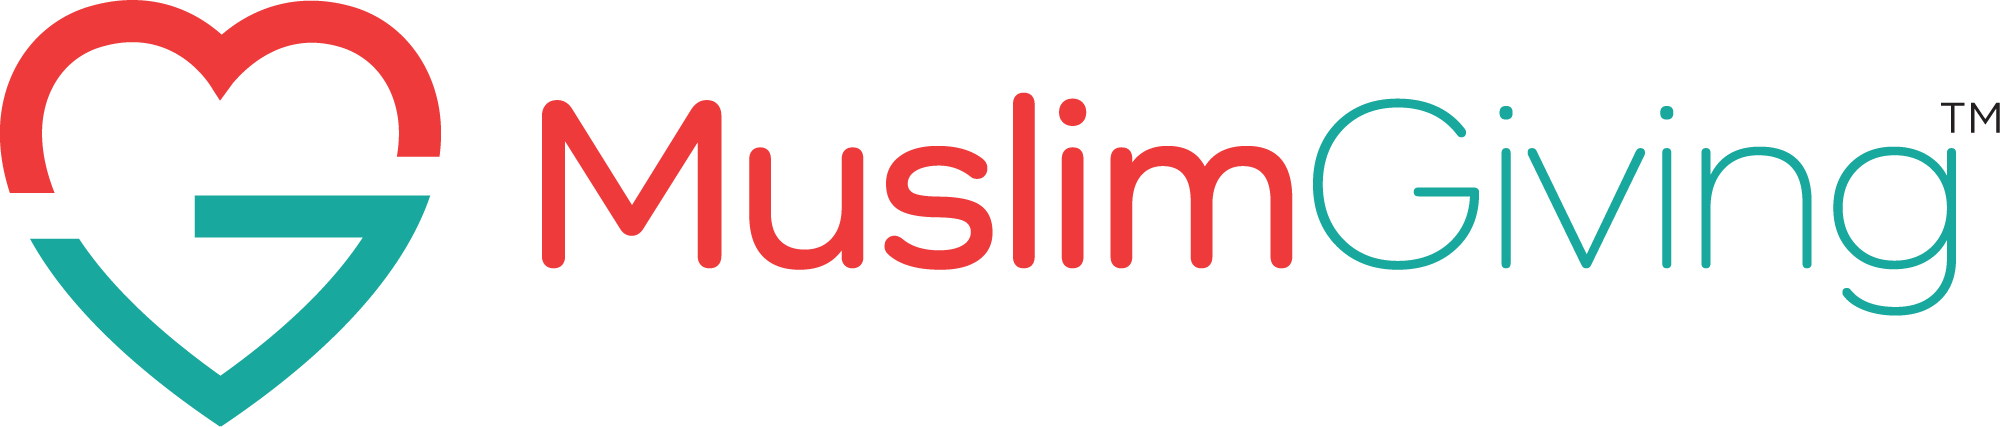 Fundraising Logo - Online fundraising, fundraising ideas, donate online - MuslimGiving